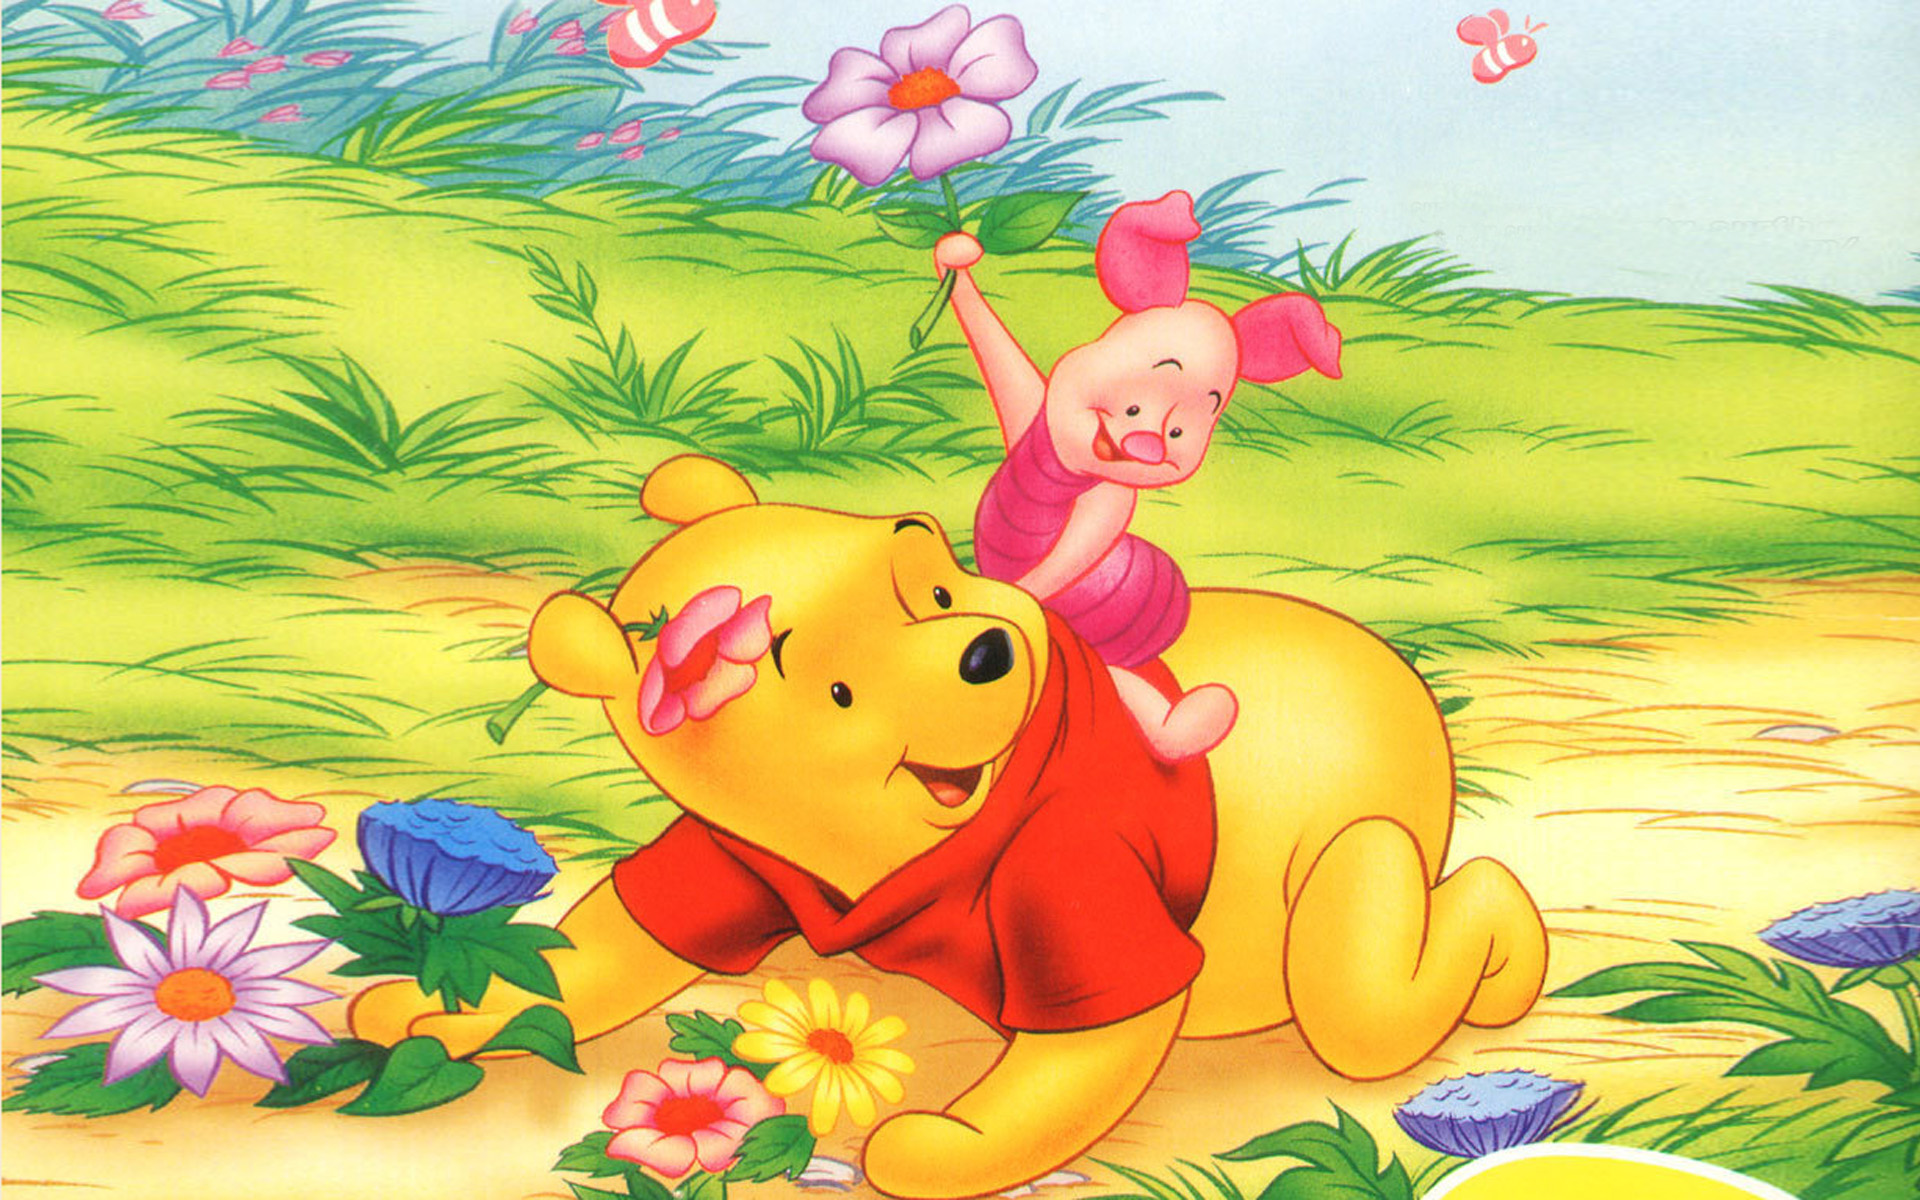 Piglet-and-Winnie The Pooh-Spring flowers-Cartoon-Disney-Image-HD  Wallpaper-1920x1200 : 